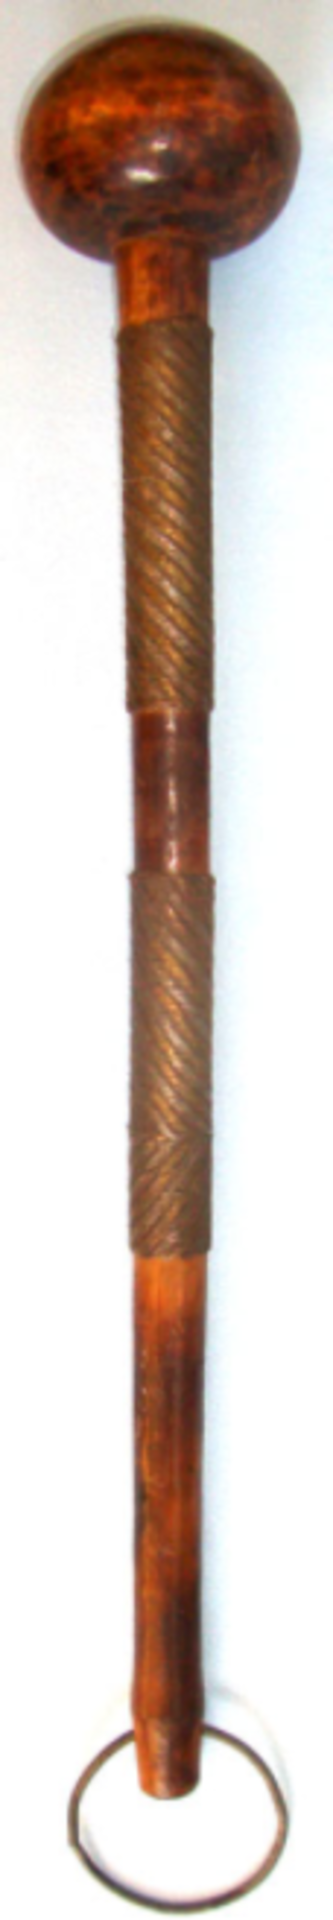 Victorian Hand Crafted African Zulu Warrior's Wire Bound Tropical Hard Wood Knobkerrie / War Club. - Image 2 of 3